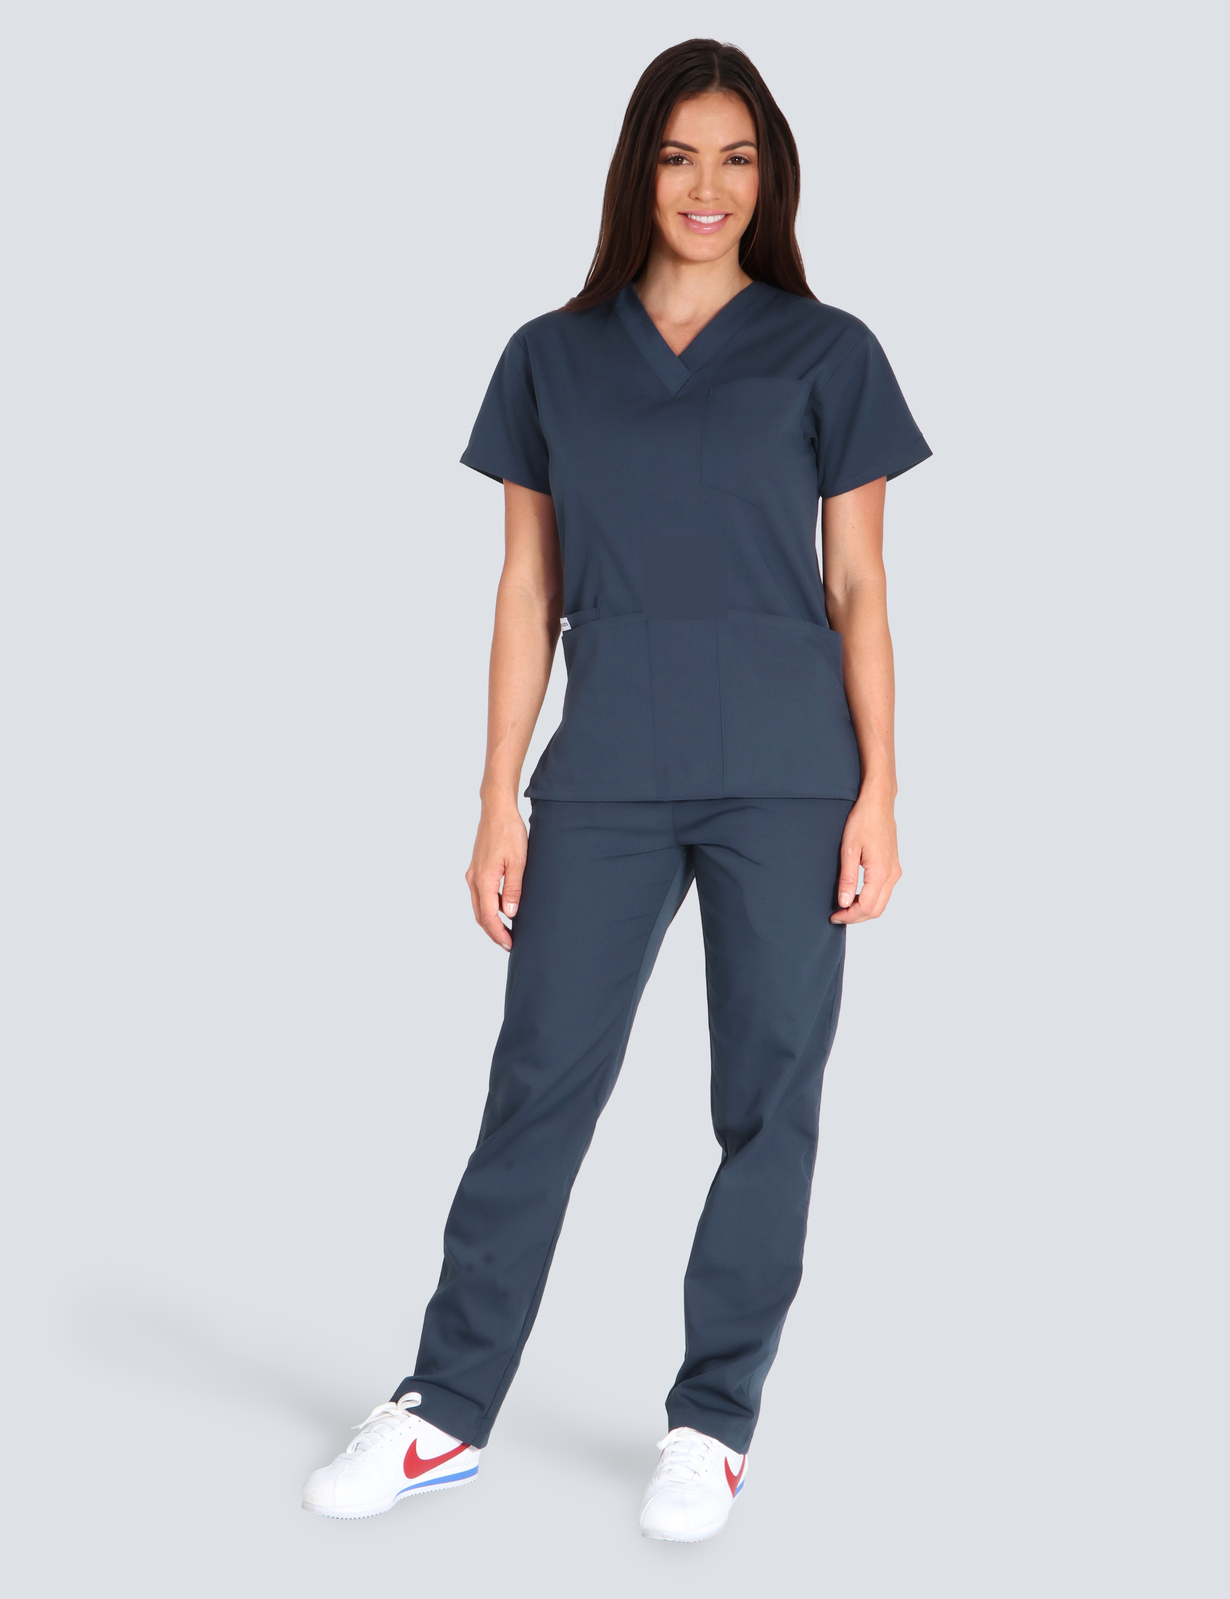 Royal Melbourne Hospital - ICU (4 Pocket Scrub Top and Regular Pants in Navy incl Logos)